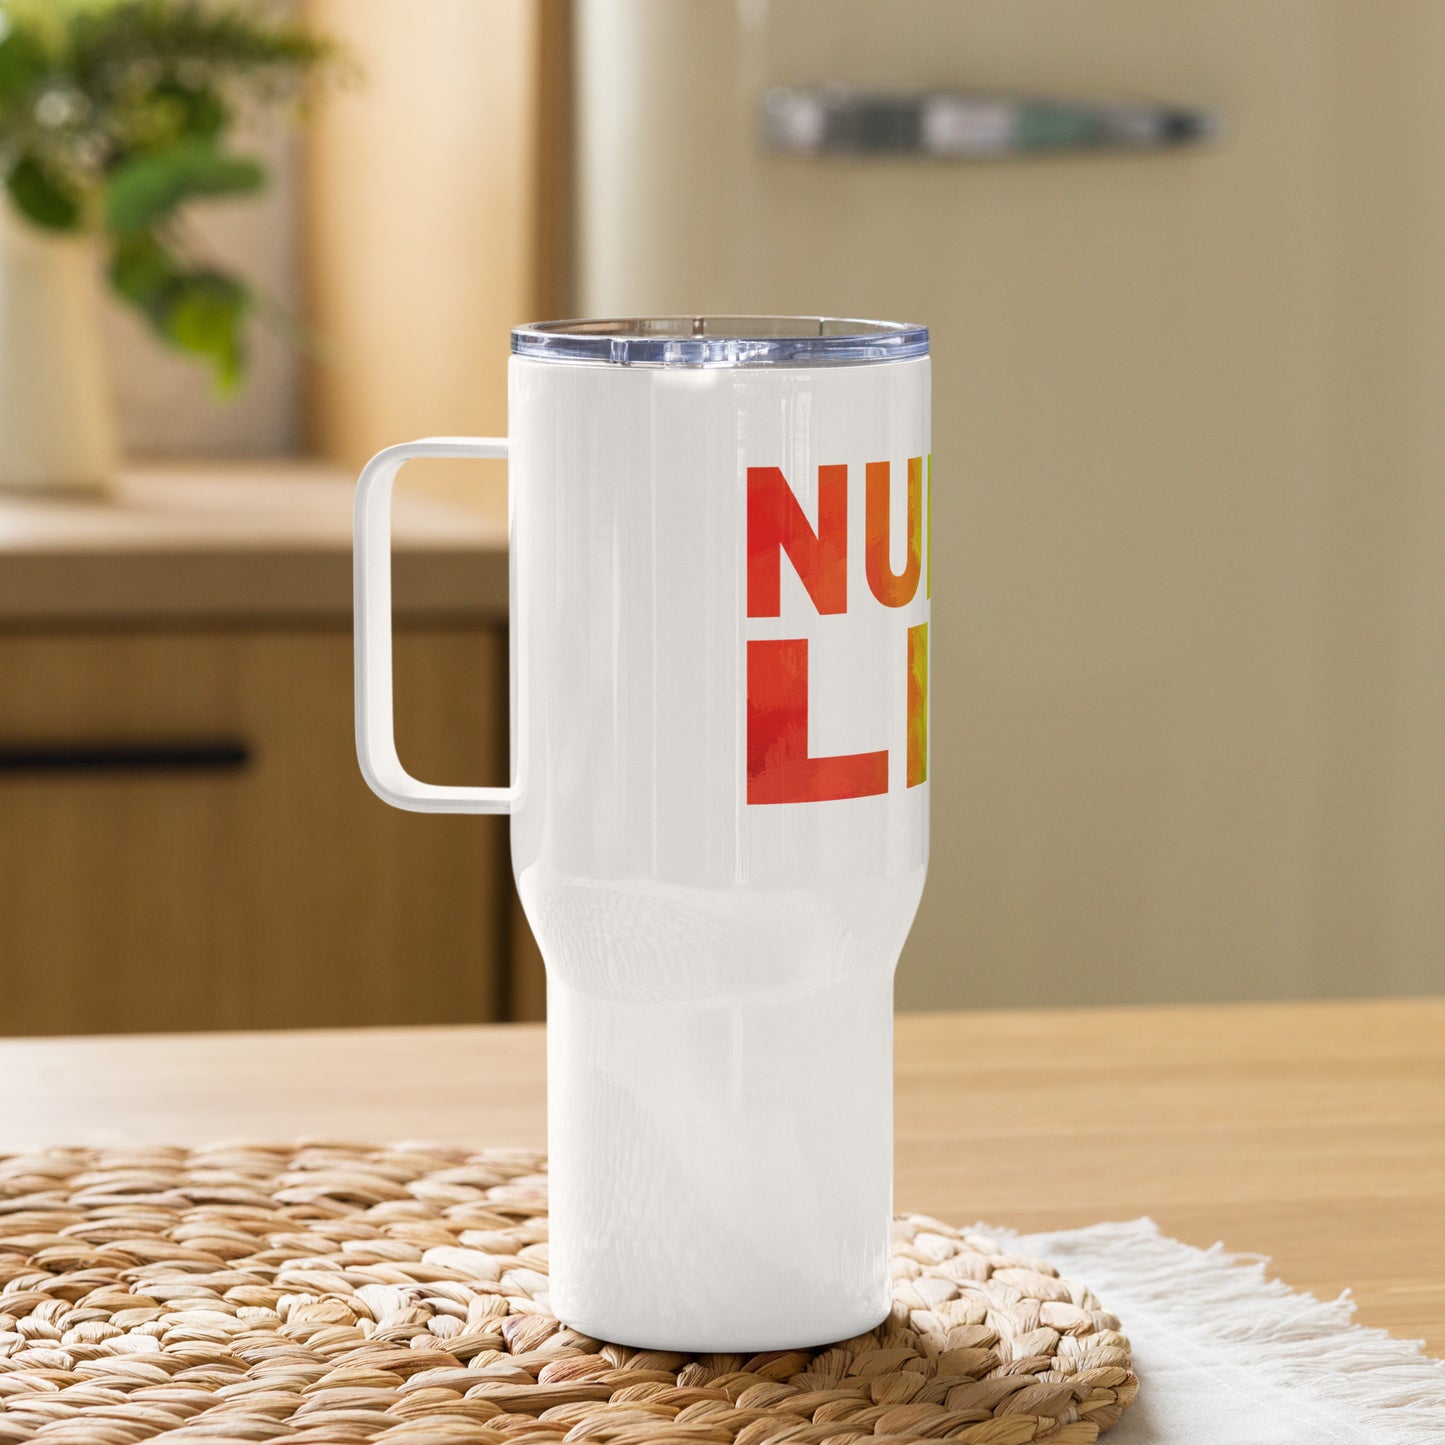 Nurse Life Travel mug with a handle